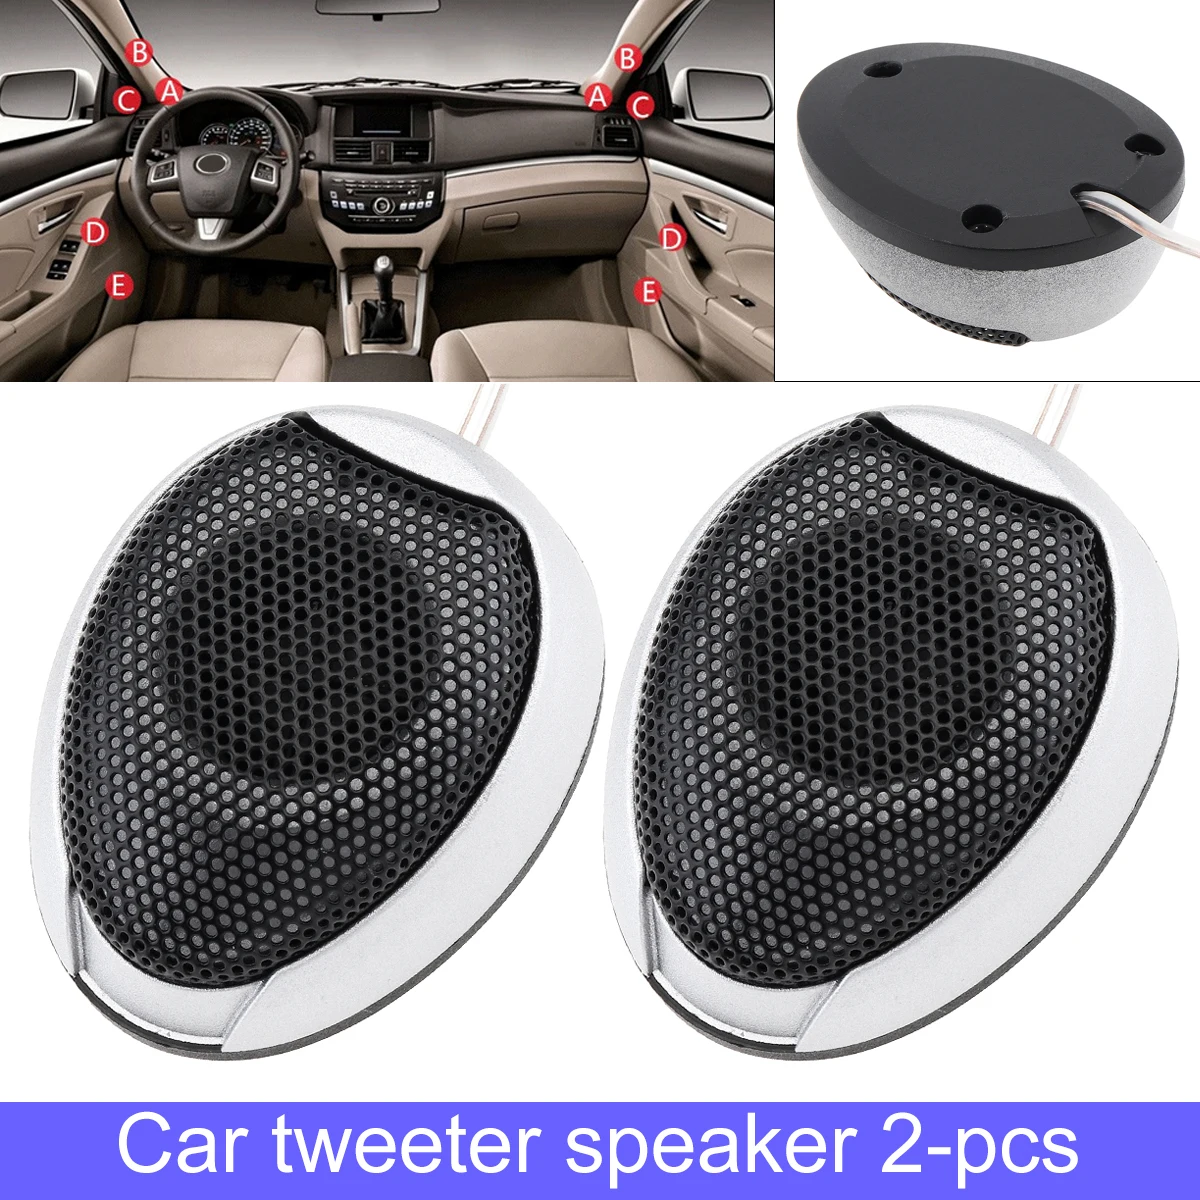 2Pcs Universal Car Tweeter Speakers 1000W High Efficiency Mini Dome Tweeter Speaker for Car Vehicle Auto Audio System